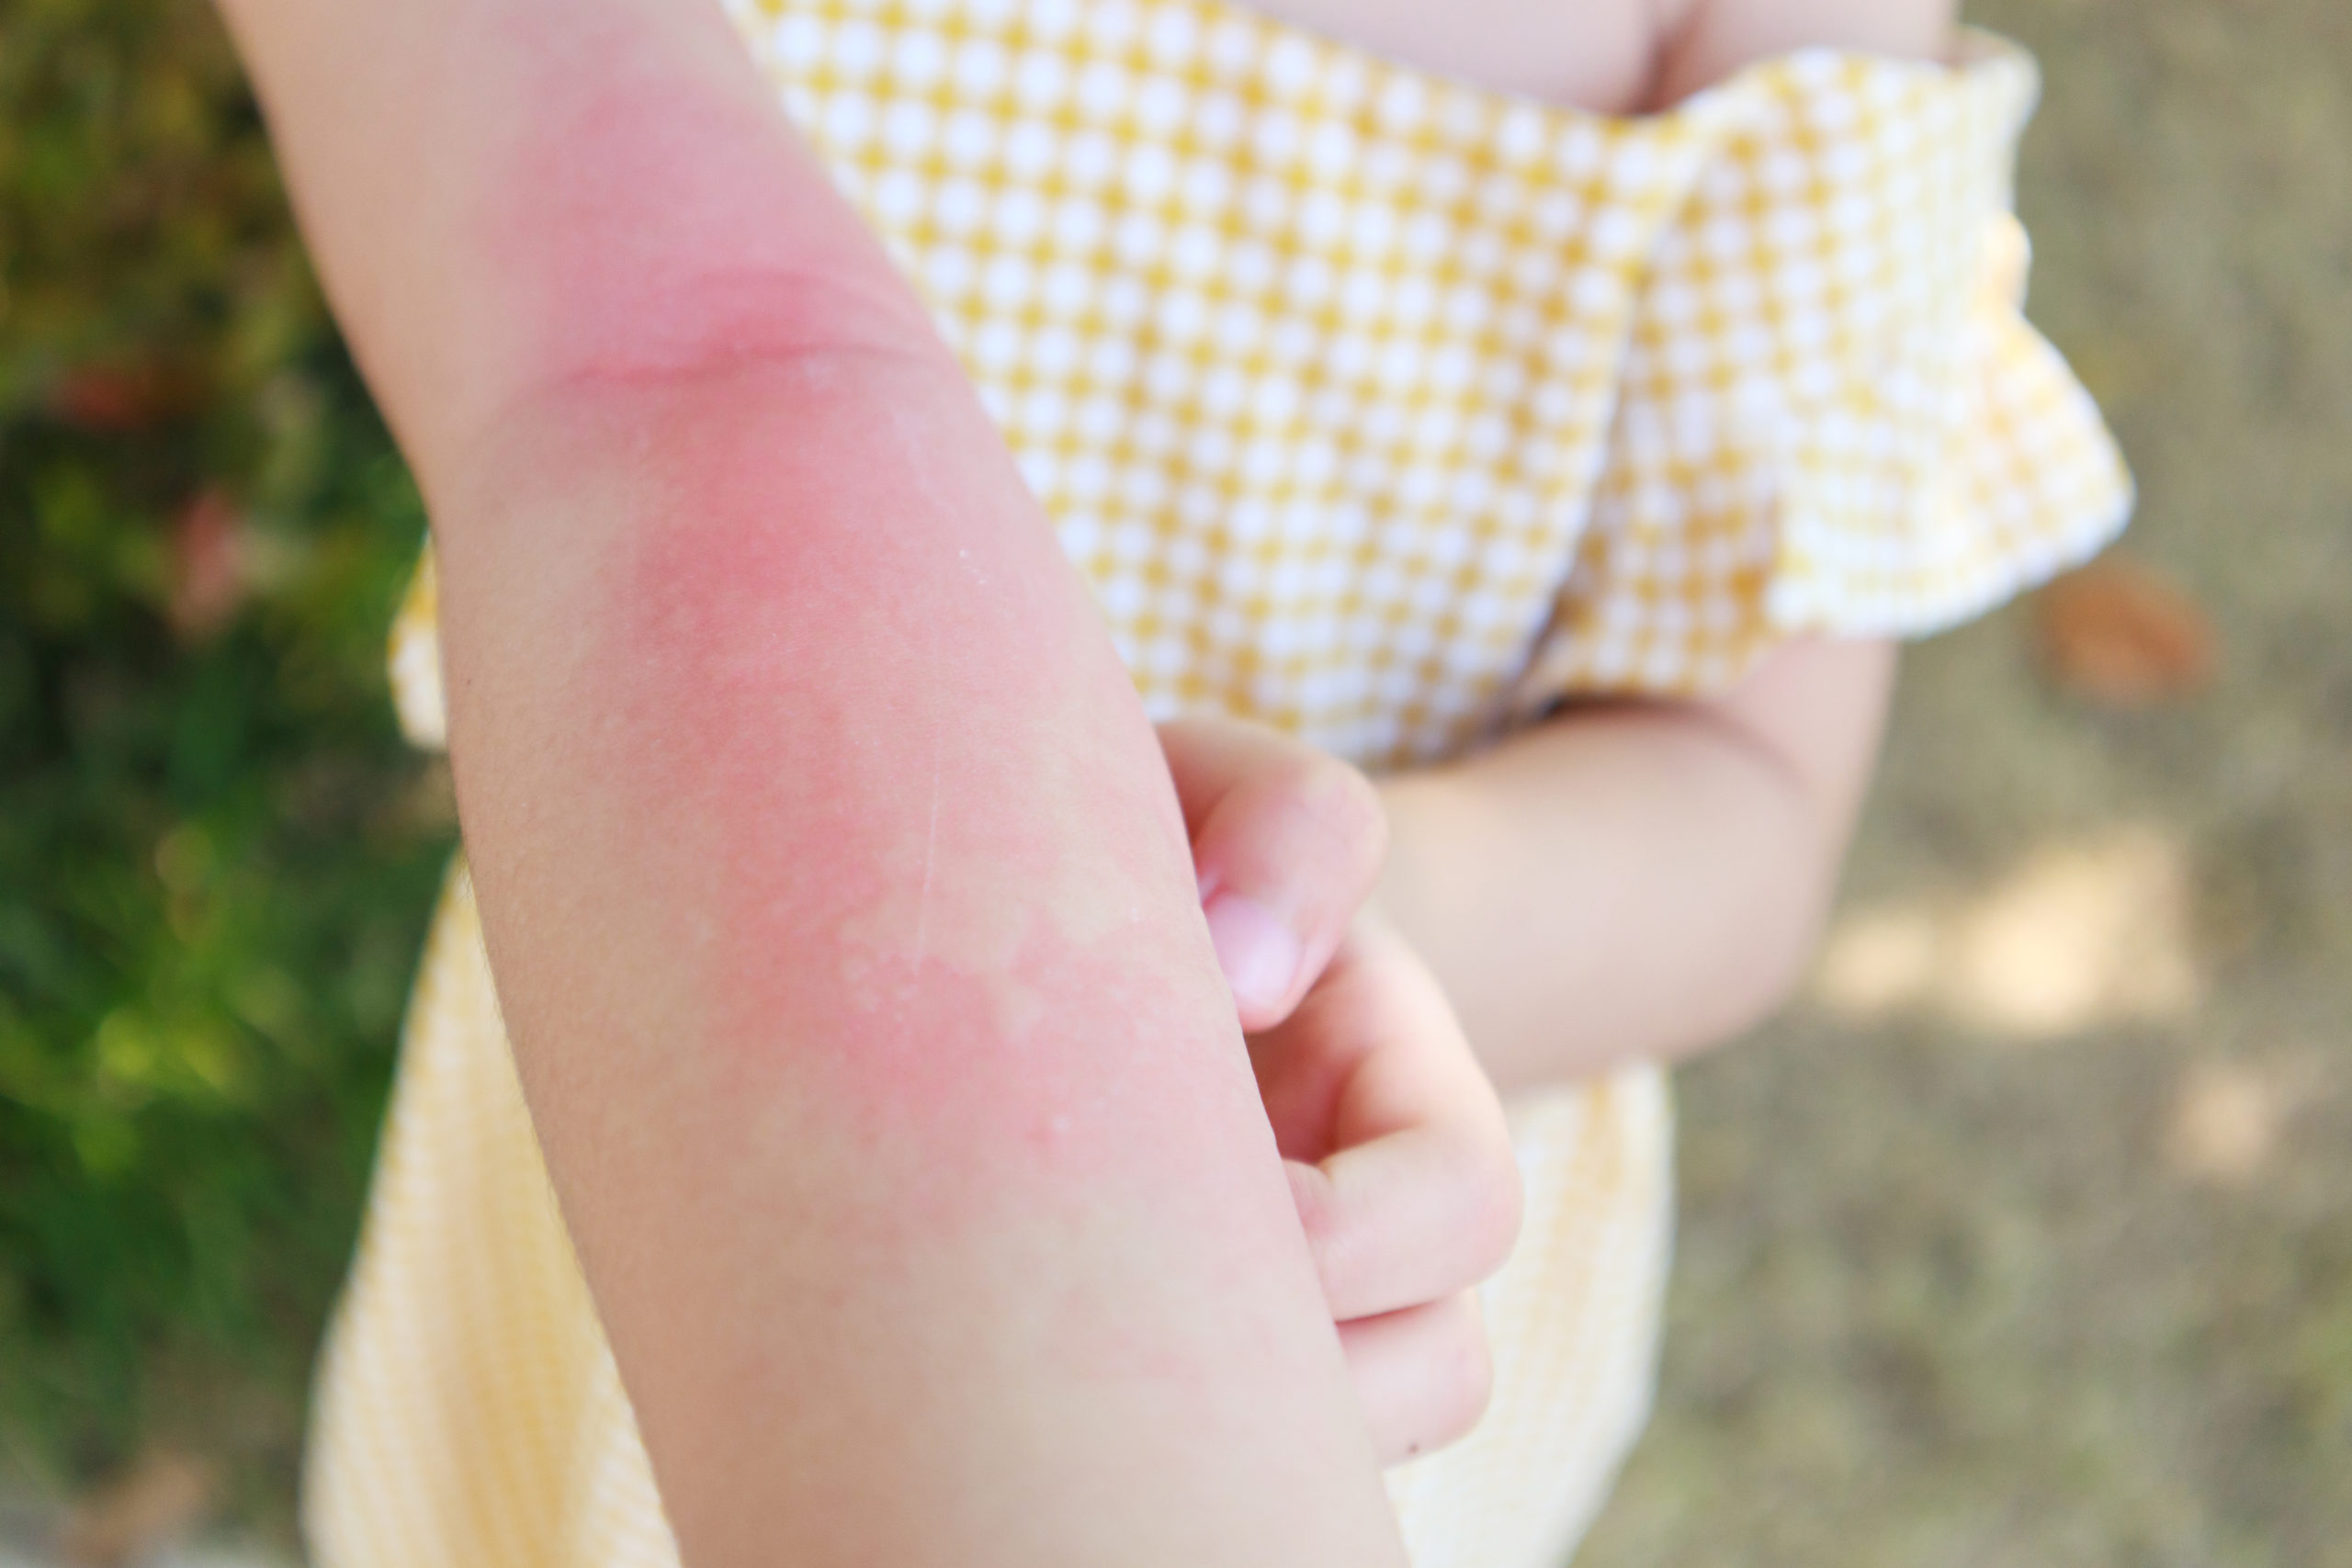 Skin manifestations in children with food allergy